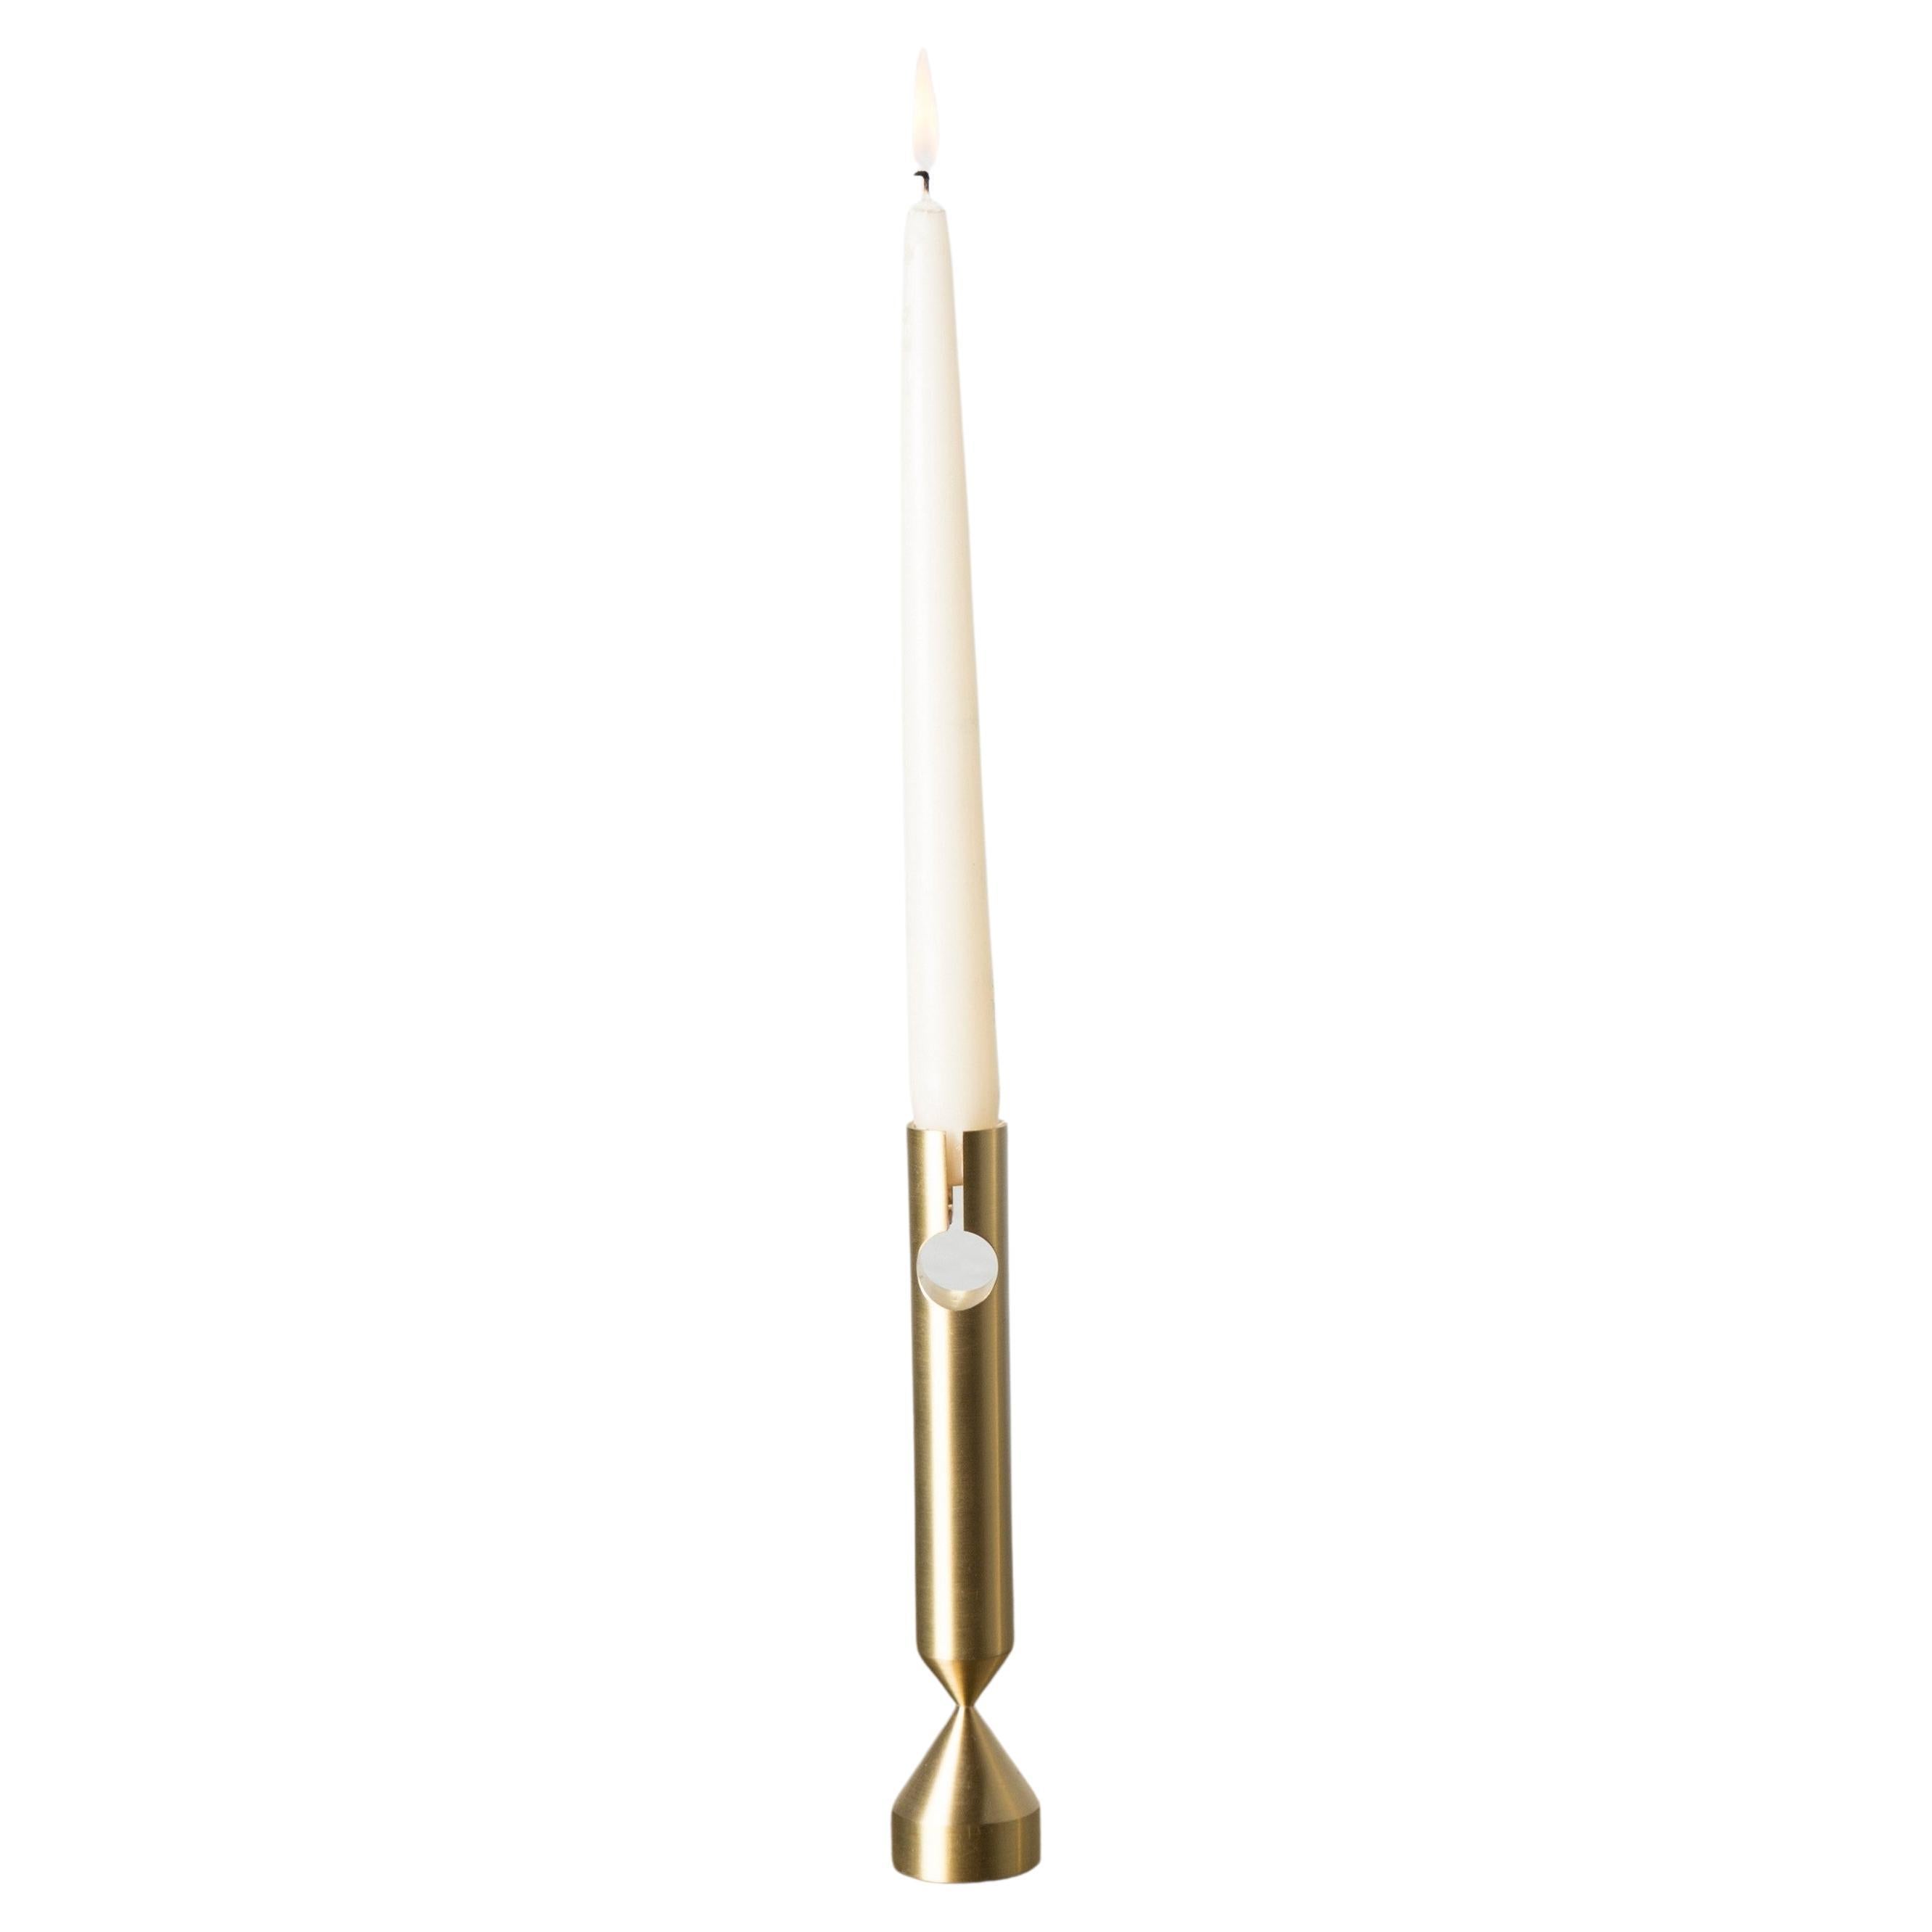 Medium Pillar Brass Candlestick by Gentner Design